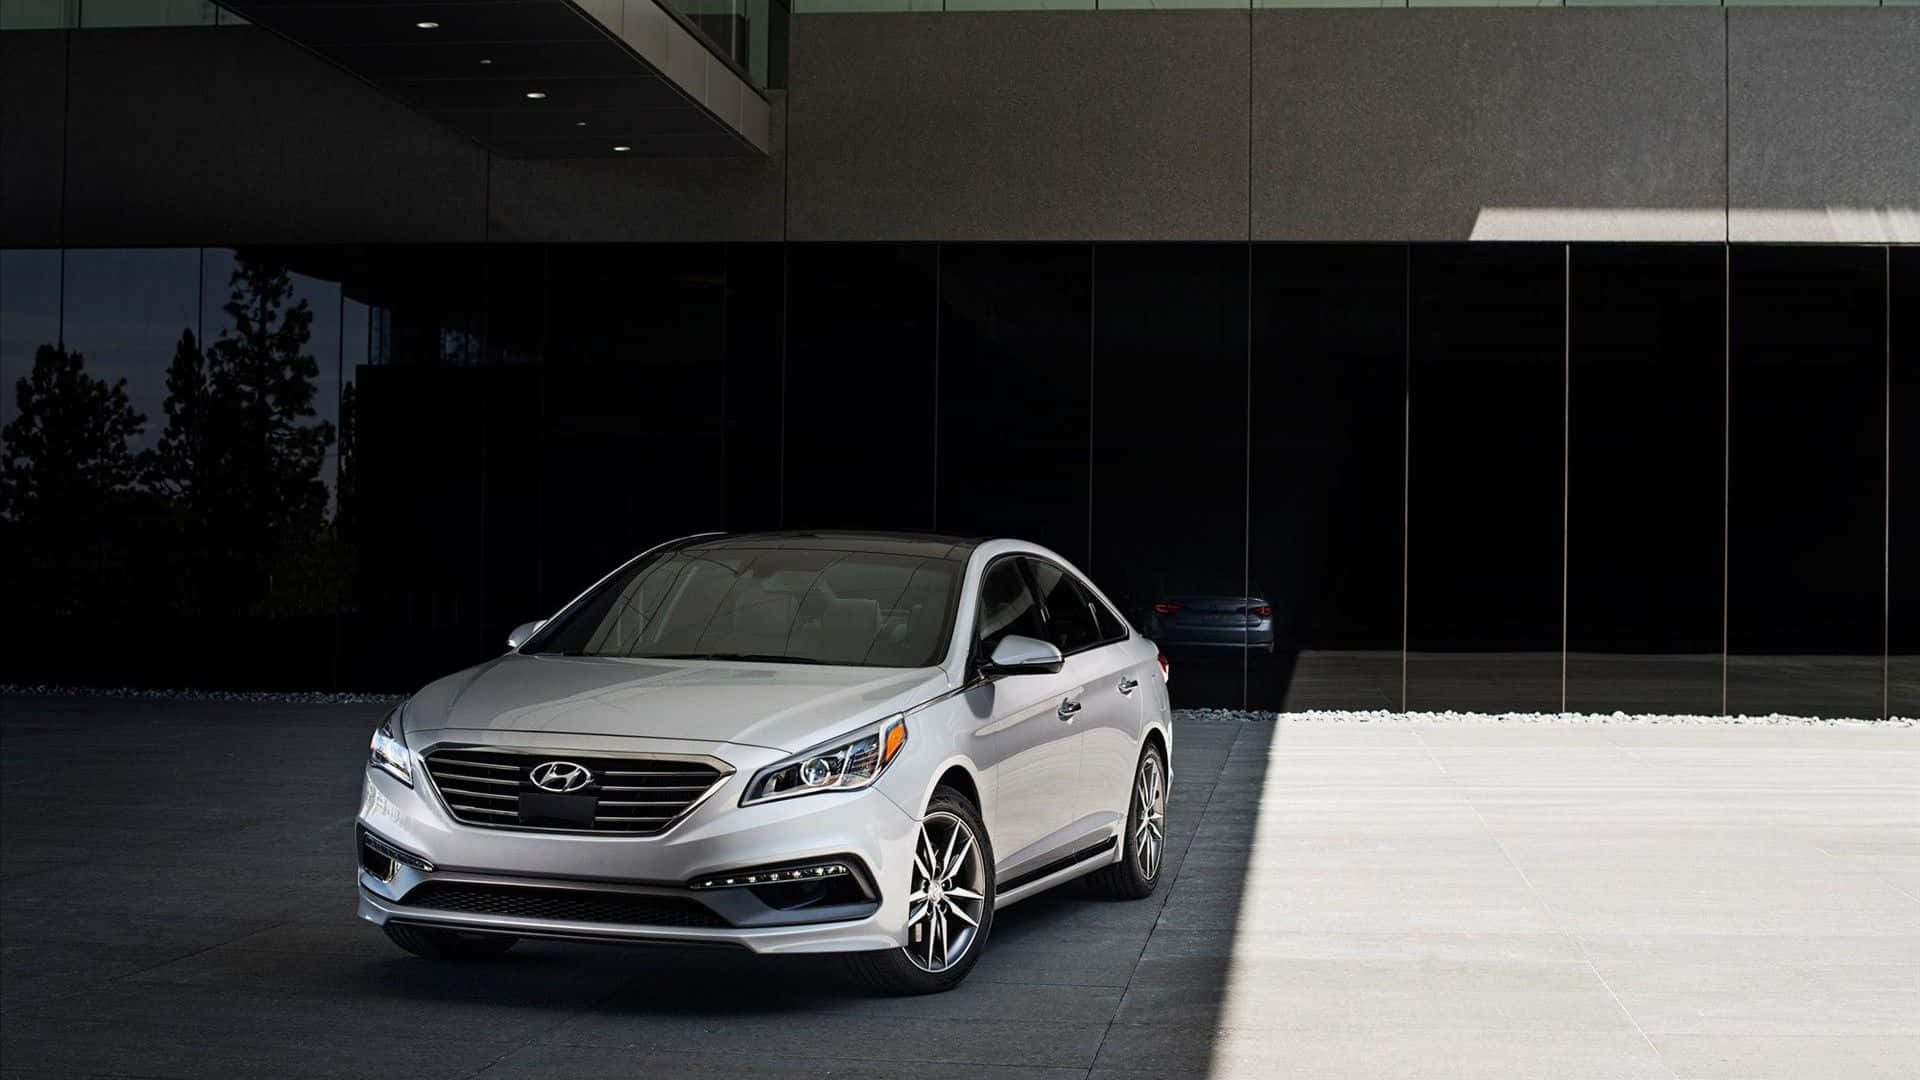 Sleek Hyundai Sonata on Scenic Roadside Wallpaper